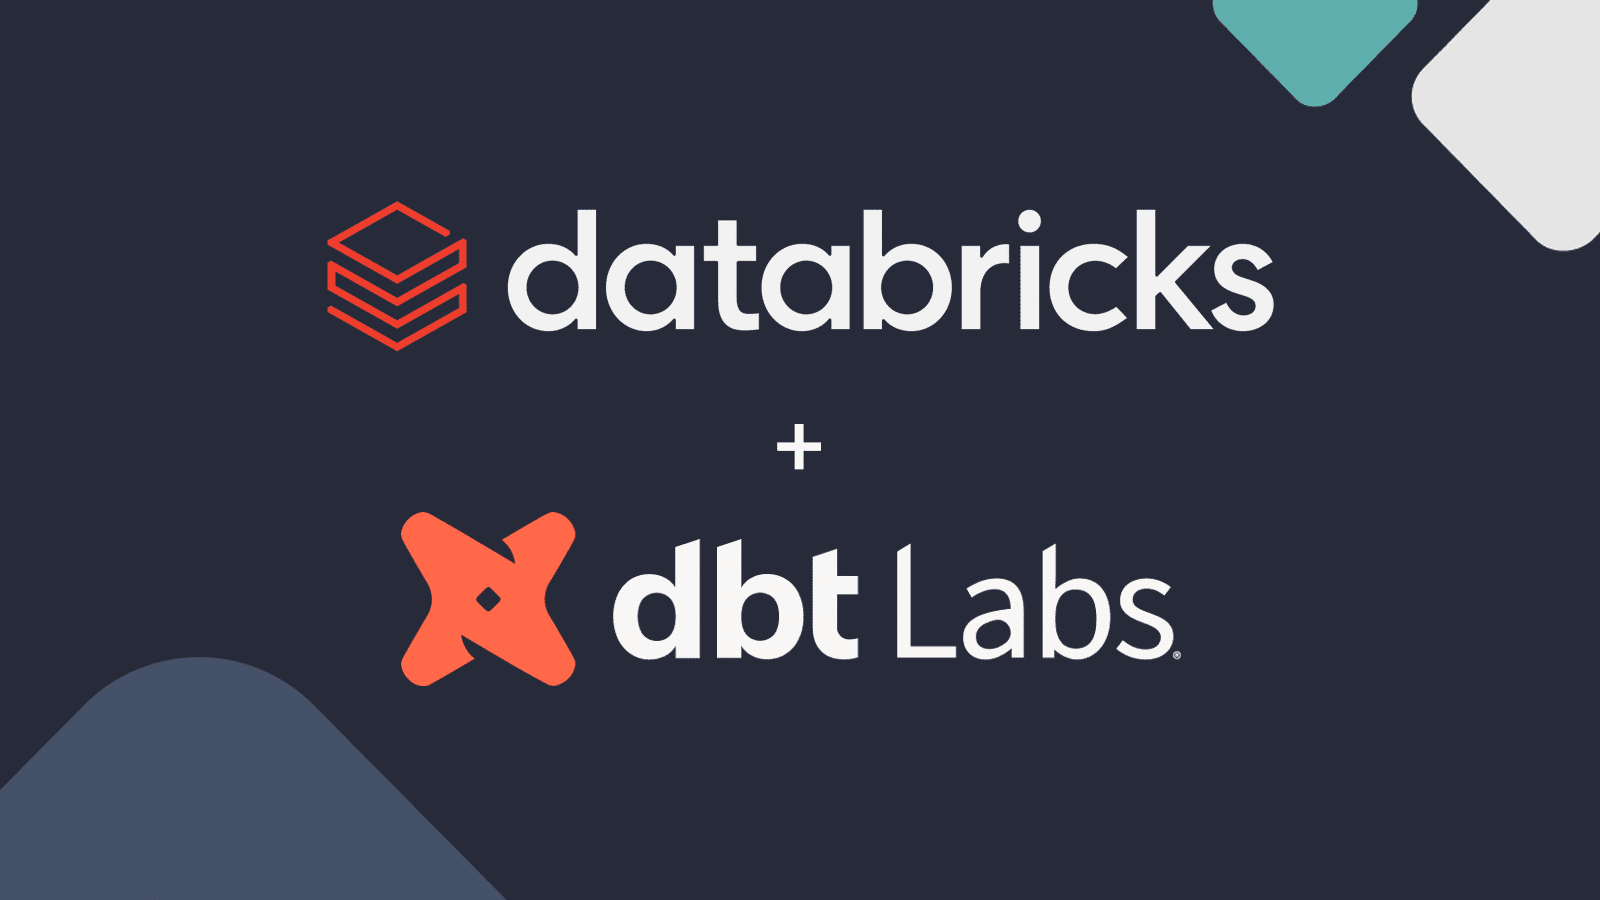 dbt Labs and Databricks: An expanding partnership